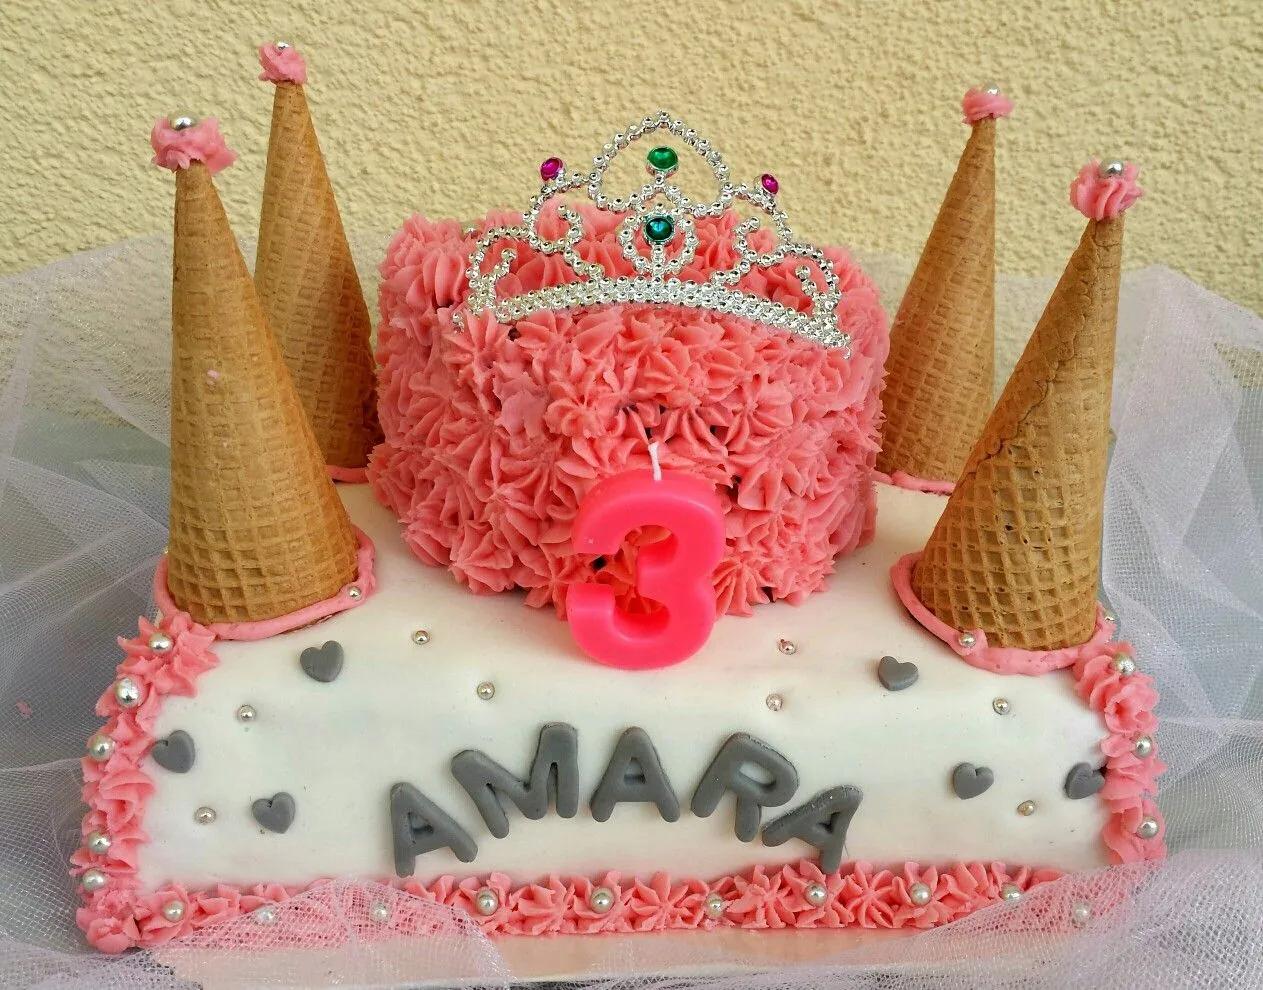 Princess / Castle Cake - Prinzessin Schloss Torte | Cake, Bday, Desserts